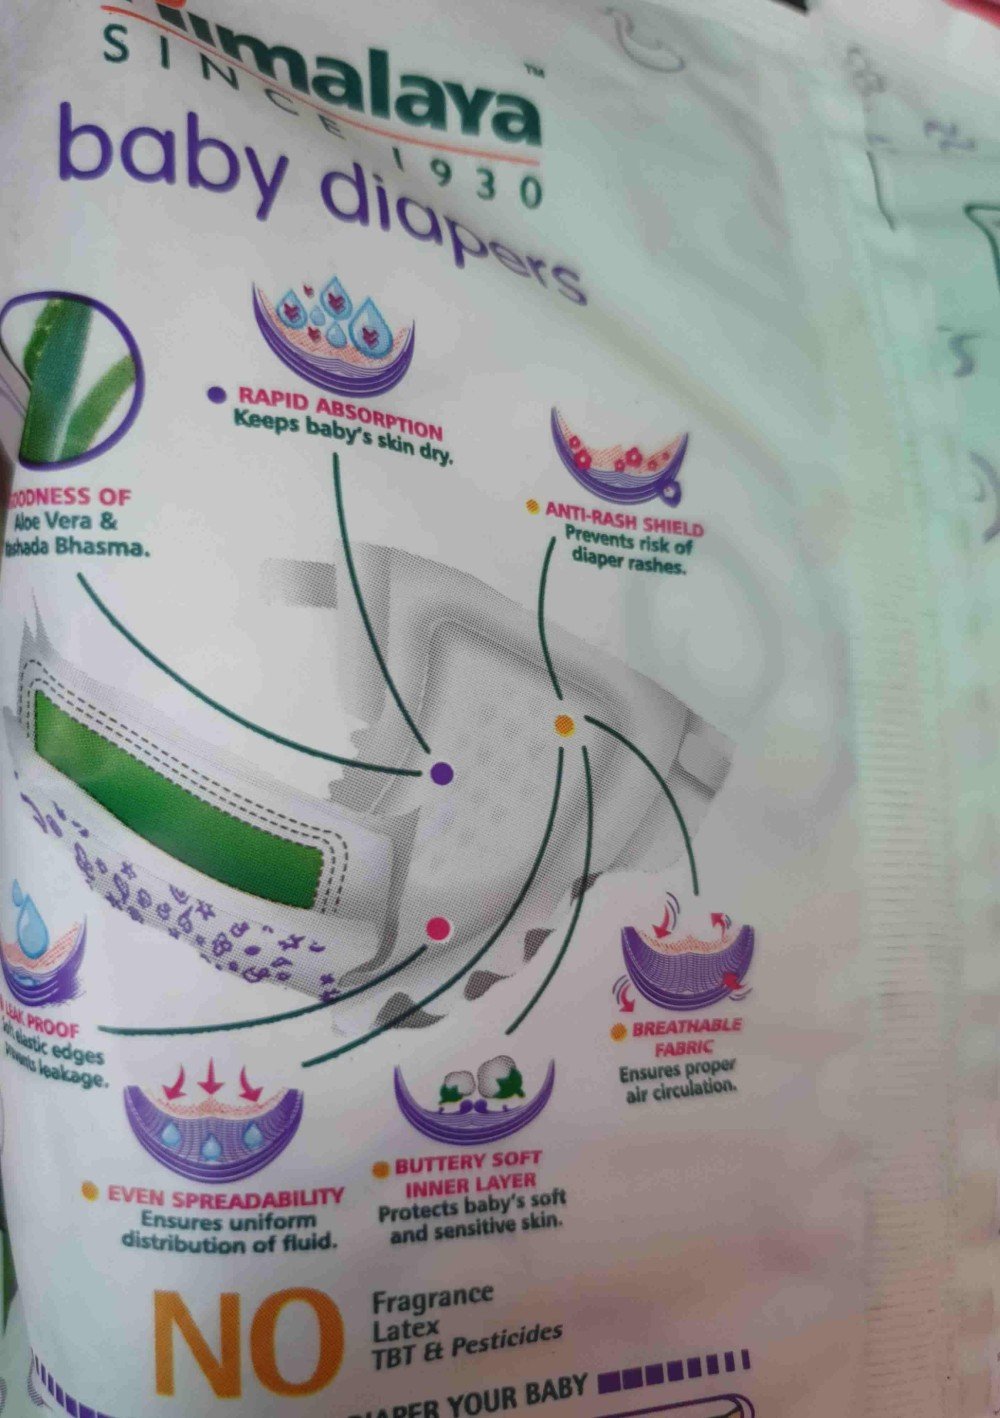 Himalaya Total Care Baby Pants Combo S 4nx28's - 7004311 at 948.71 INR in  Bengaluru | The Himalaya Drug Company